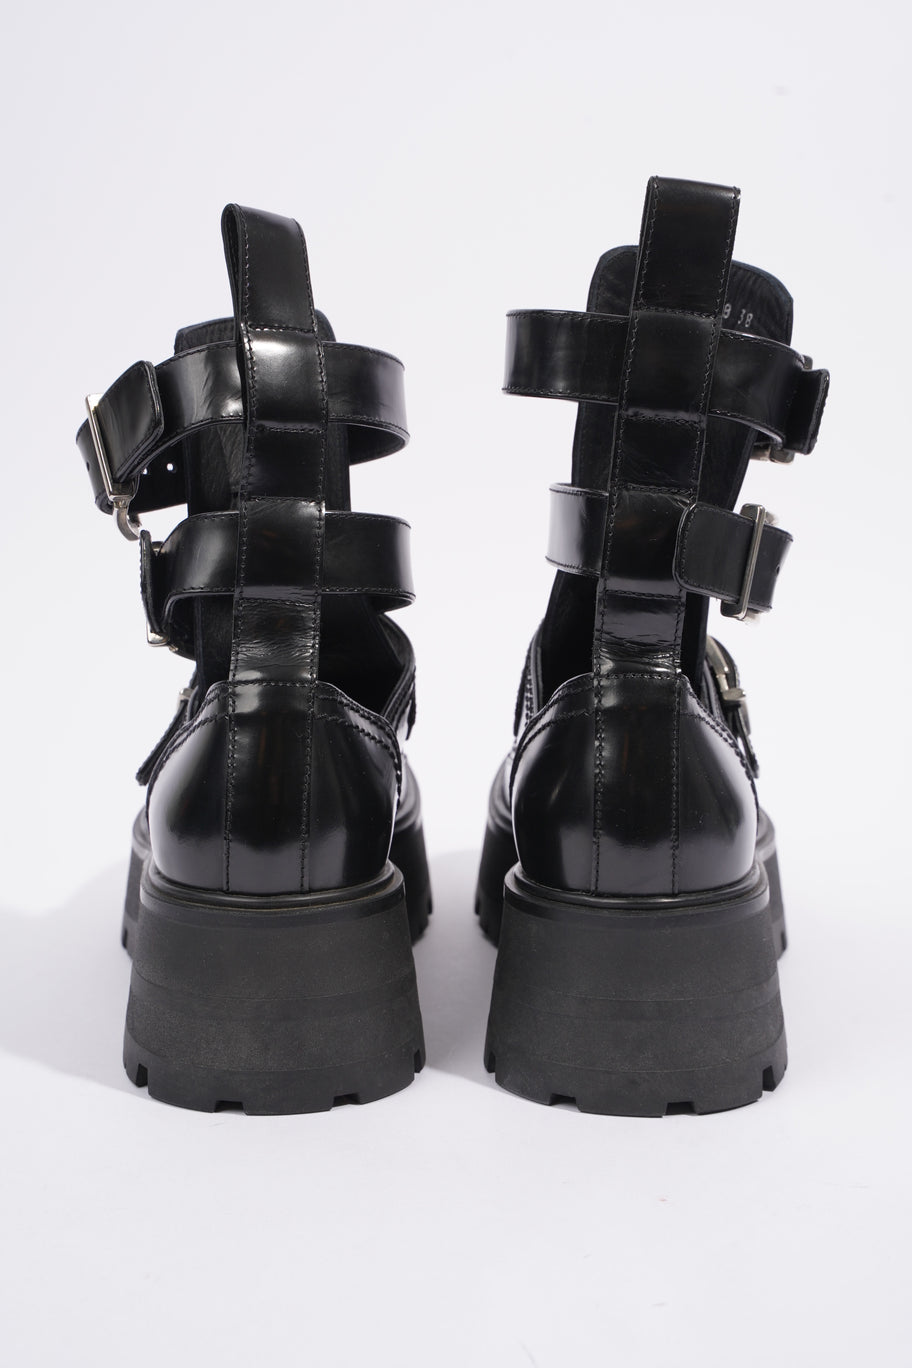 Rave Buckle Boot Black Leather EU 38 UK 5 Image 6